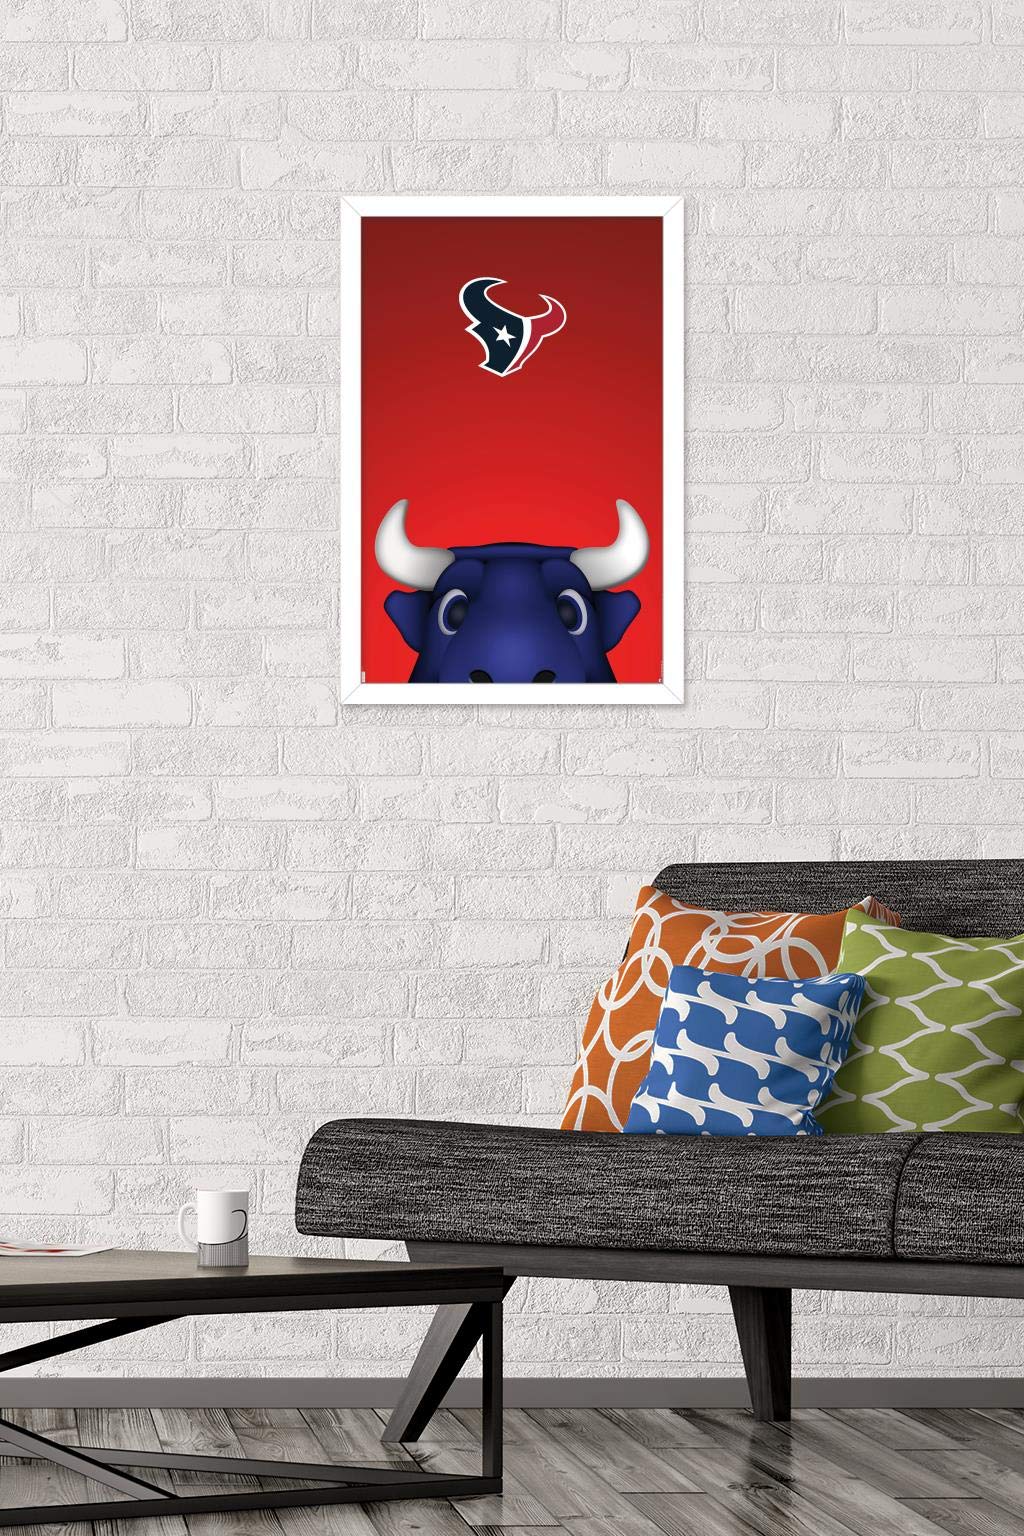 Trends International NFL Houston Texans - S. Preston Mascot Toro 20 Wall Poster, 14.725" x 22.375", White Framed Version